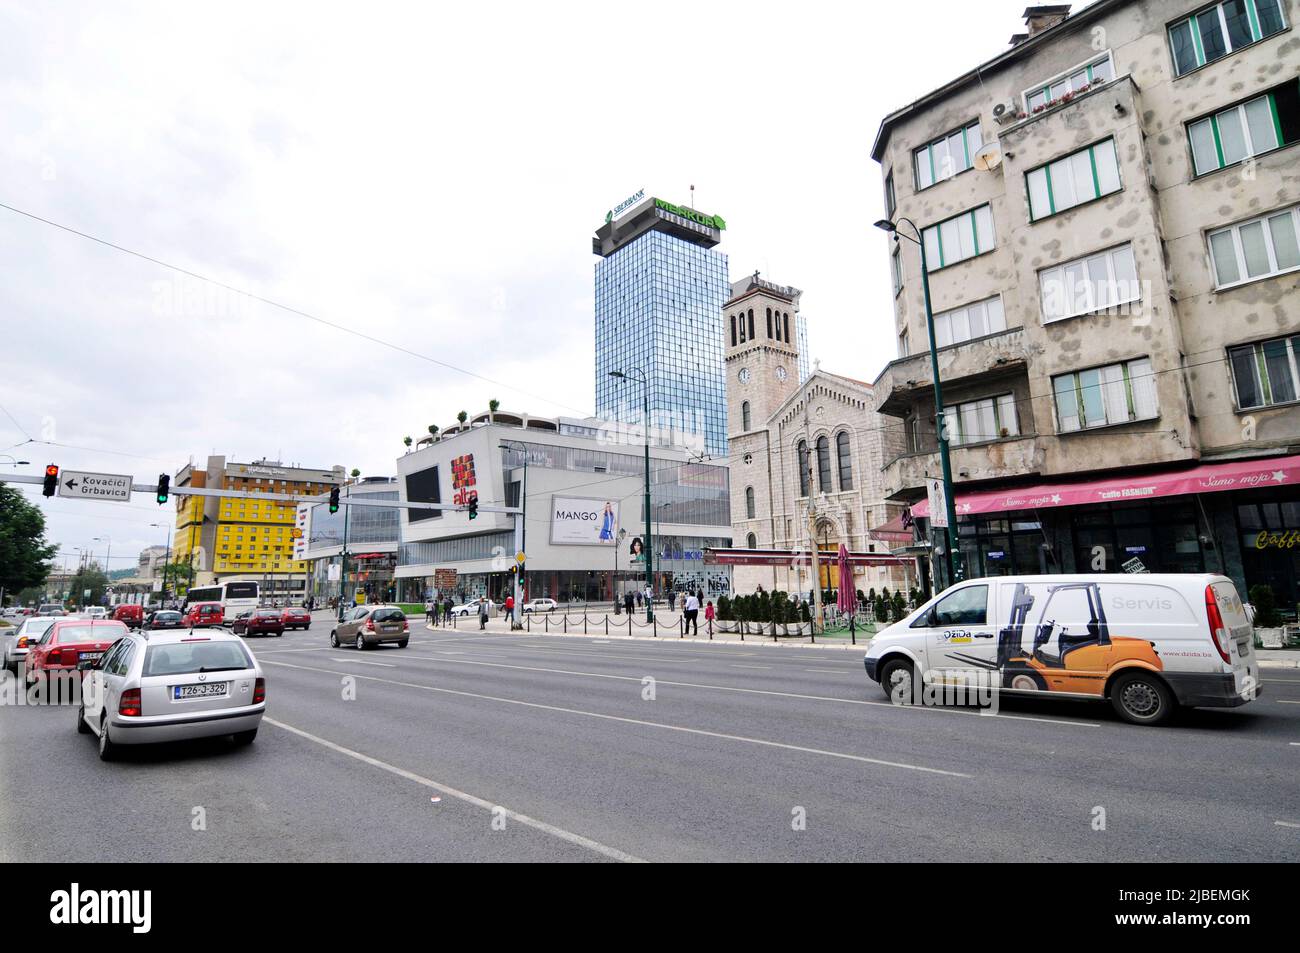 Changing skyline in the city center of Sarajevo, Bosnia & Herzegovina. Stock Photo